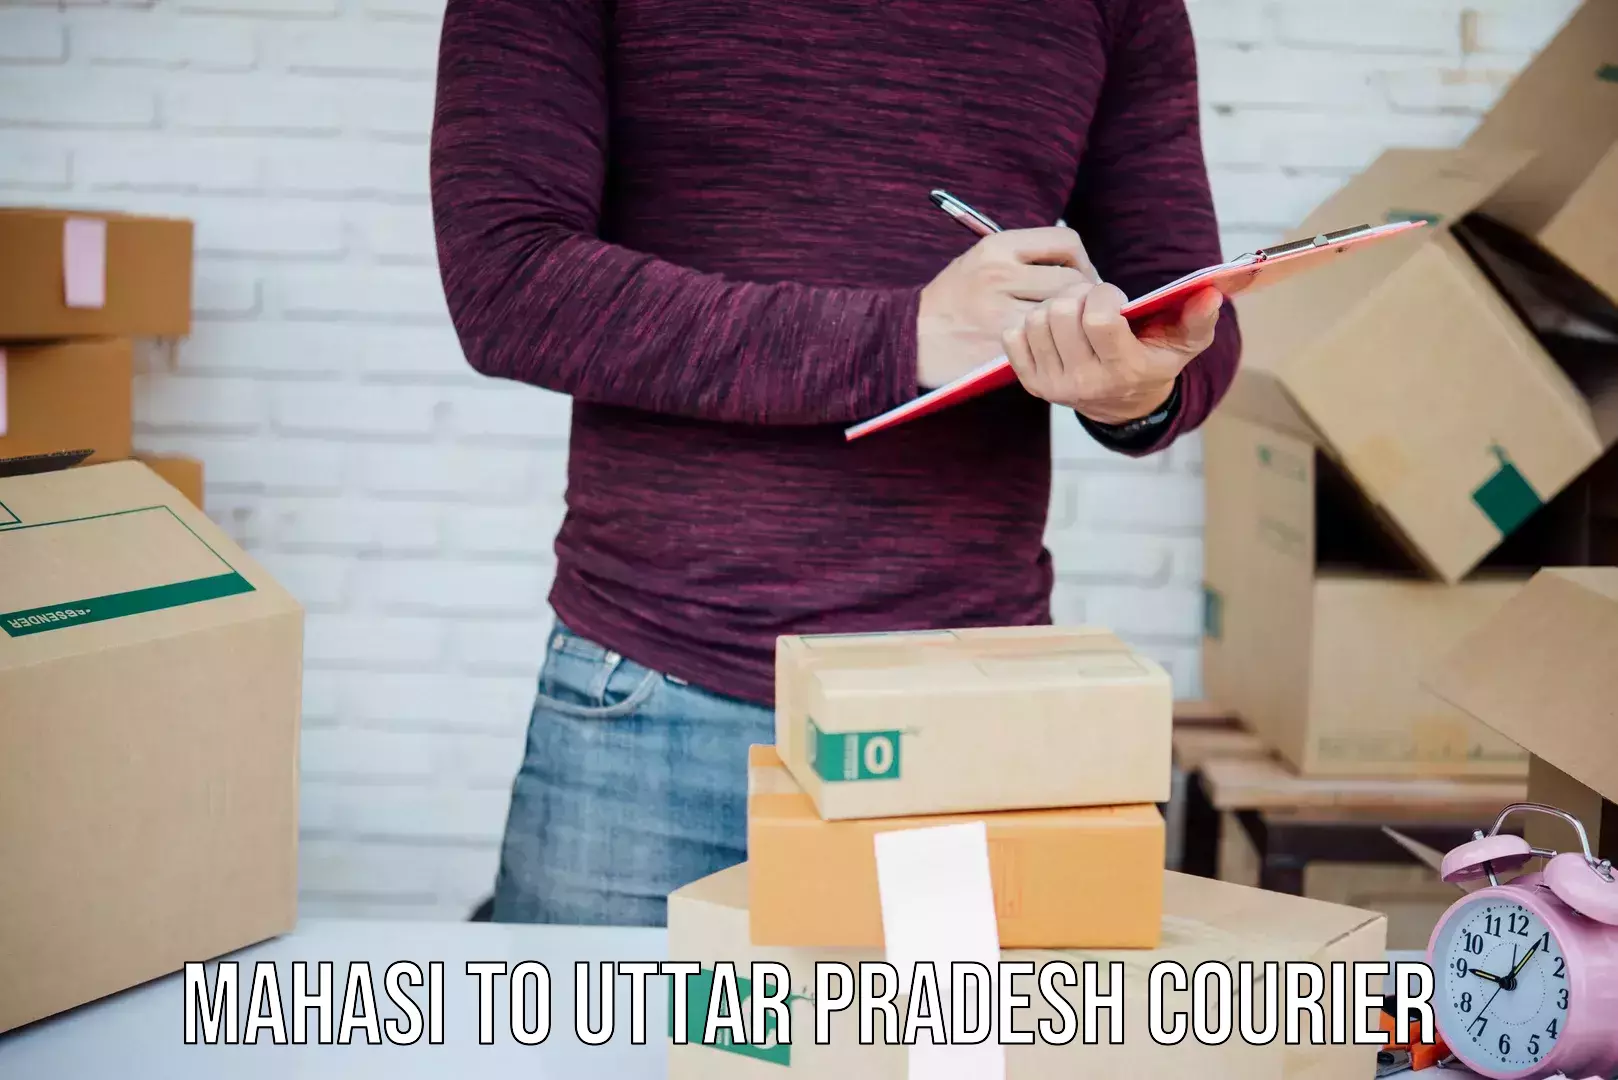 Efficient order fulfillment in Mahasi to Uttar Pradesh